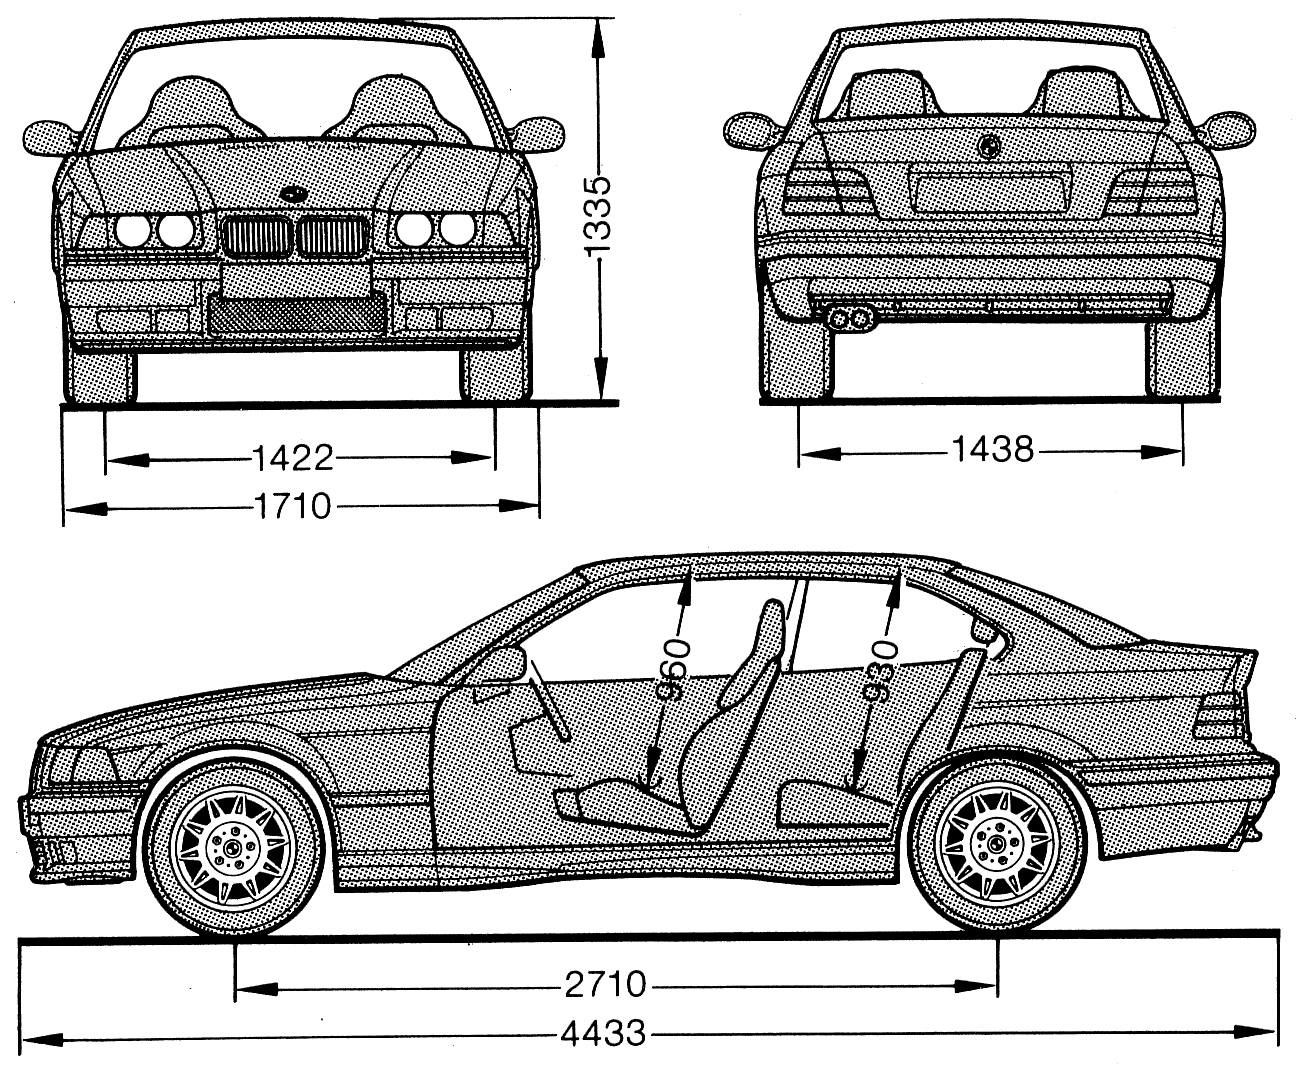 Bmw e36 coupe blueprints #5